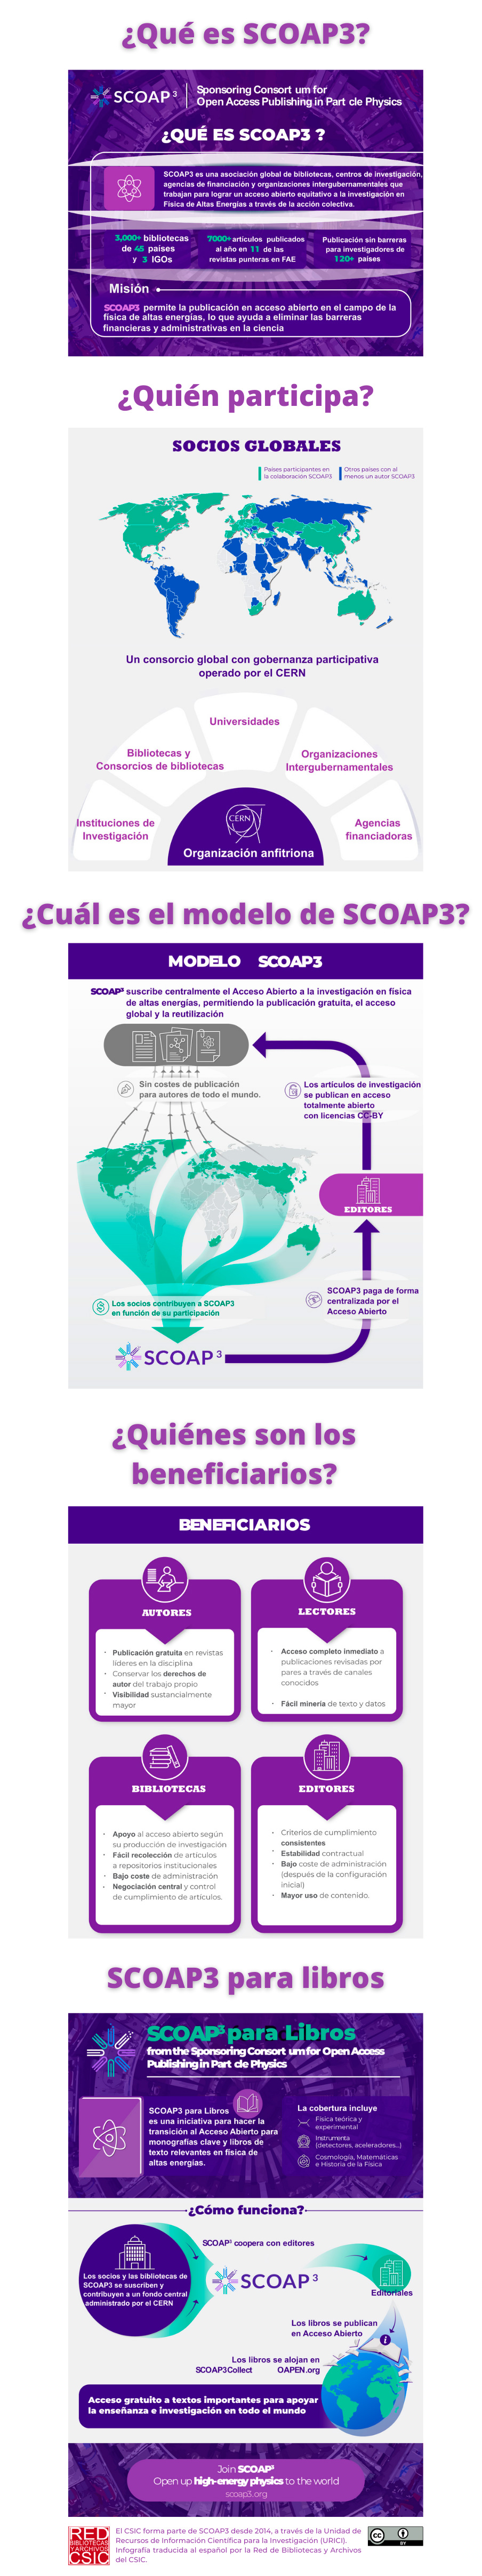 Infografía de SCOAP3 en español